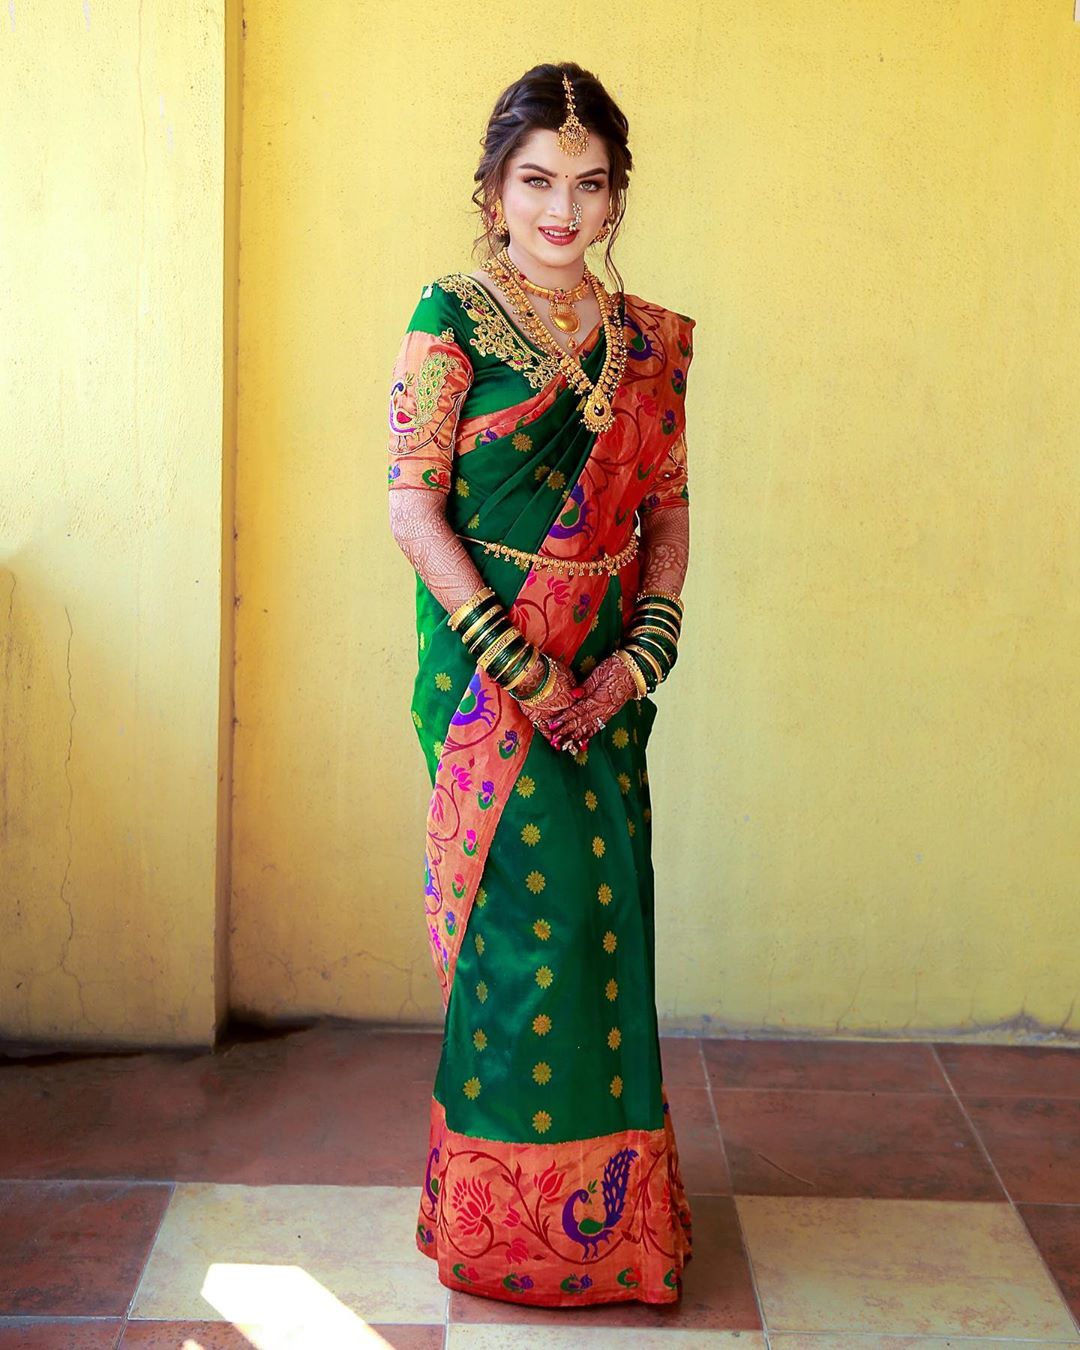 The Most Stunning Maharashtrian Brides in Nauvari Saree Look